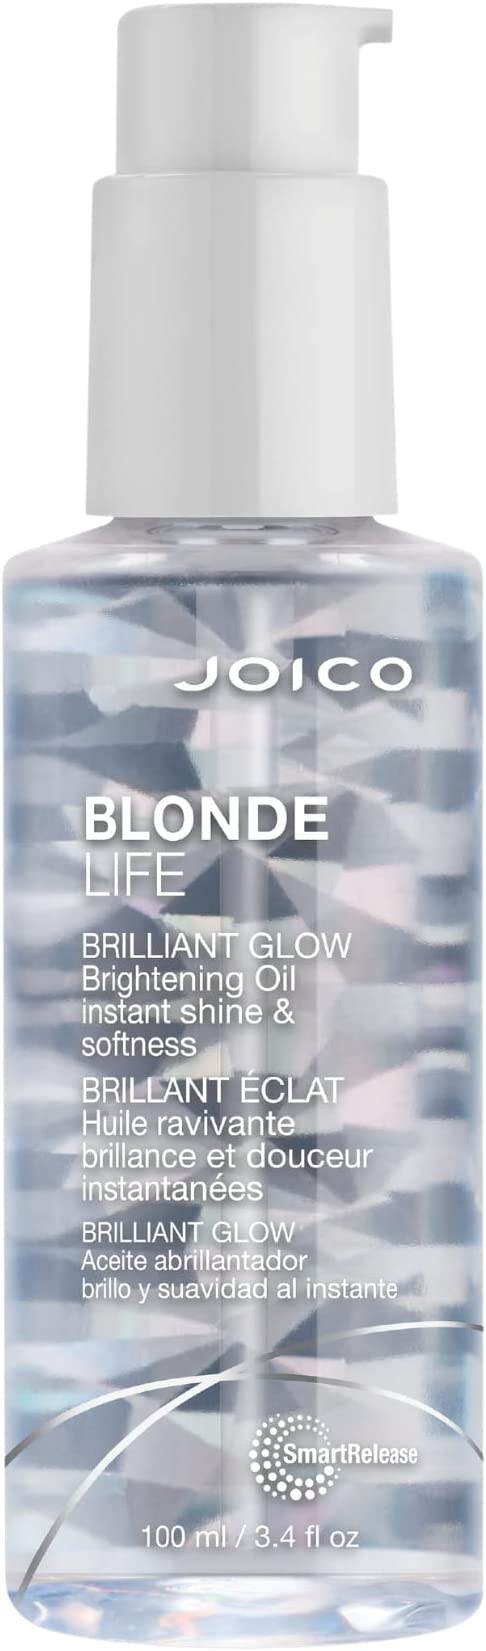 Joico Blonde Life Brightening Oil